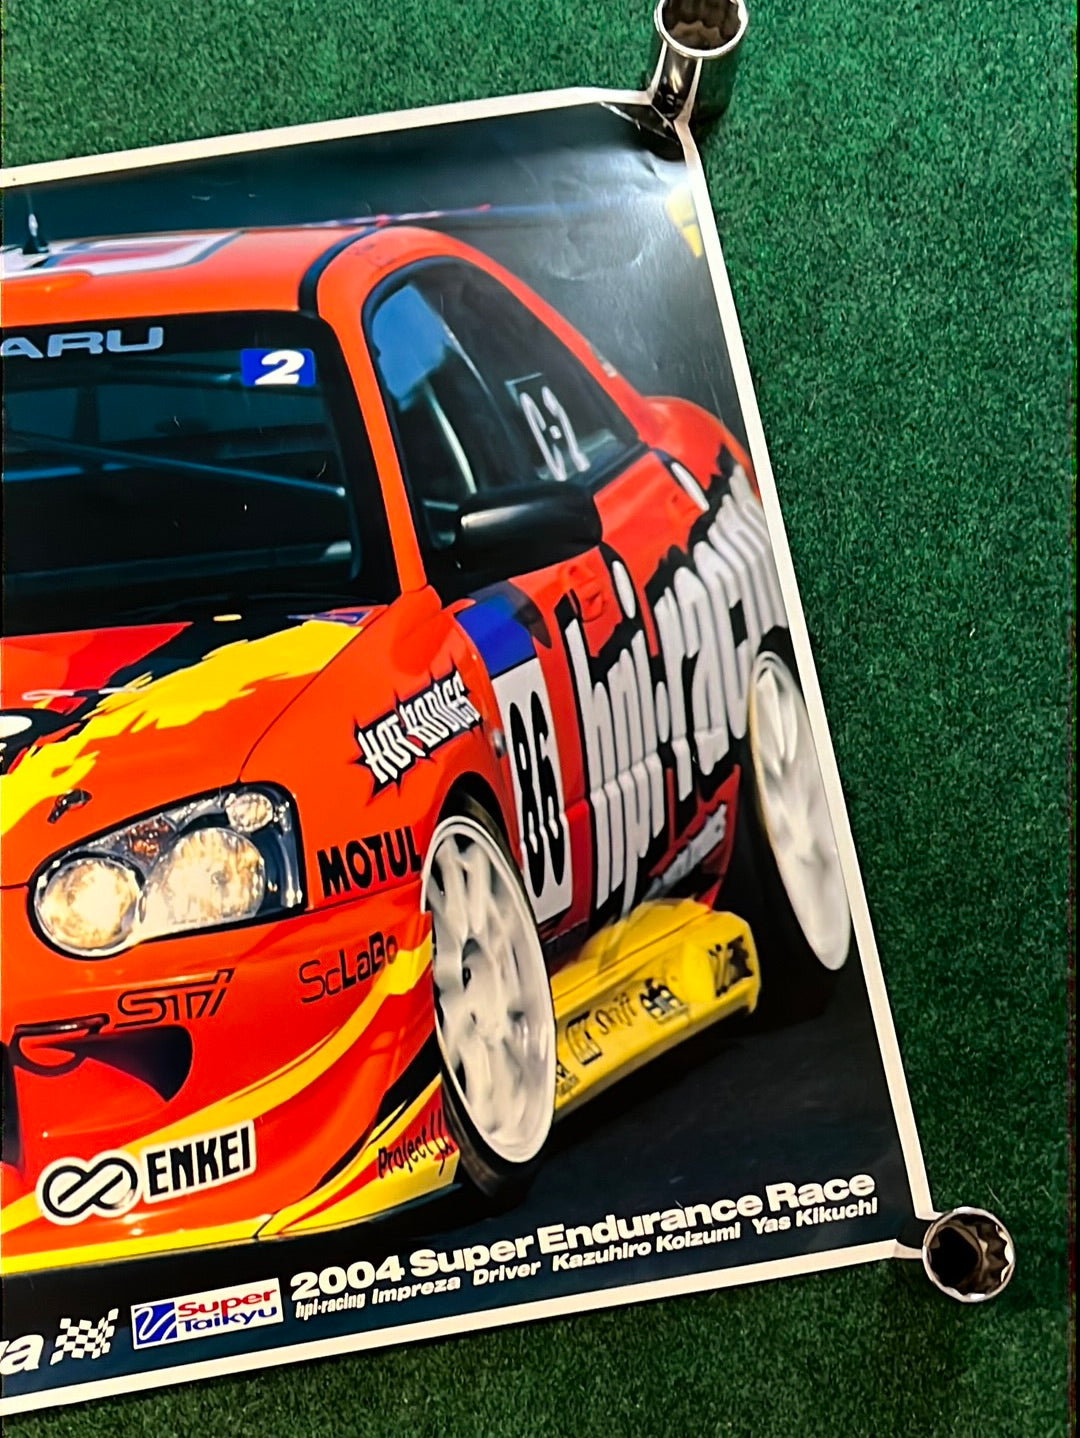 2004 Super Taikyu Prova hpi Racing Subaru Impreza WRX STI Poster